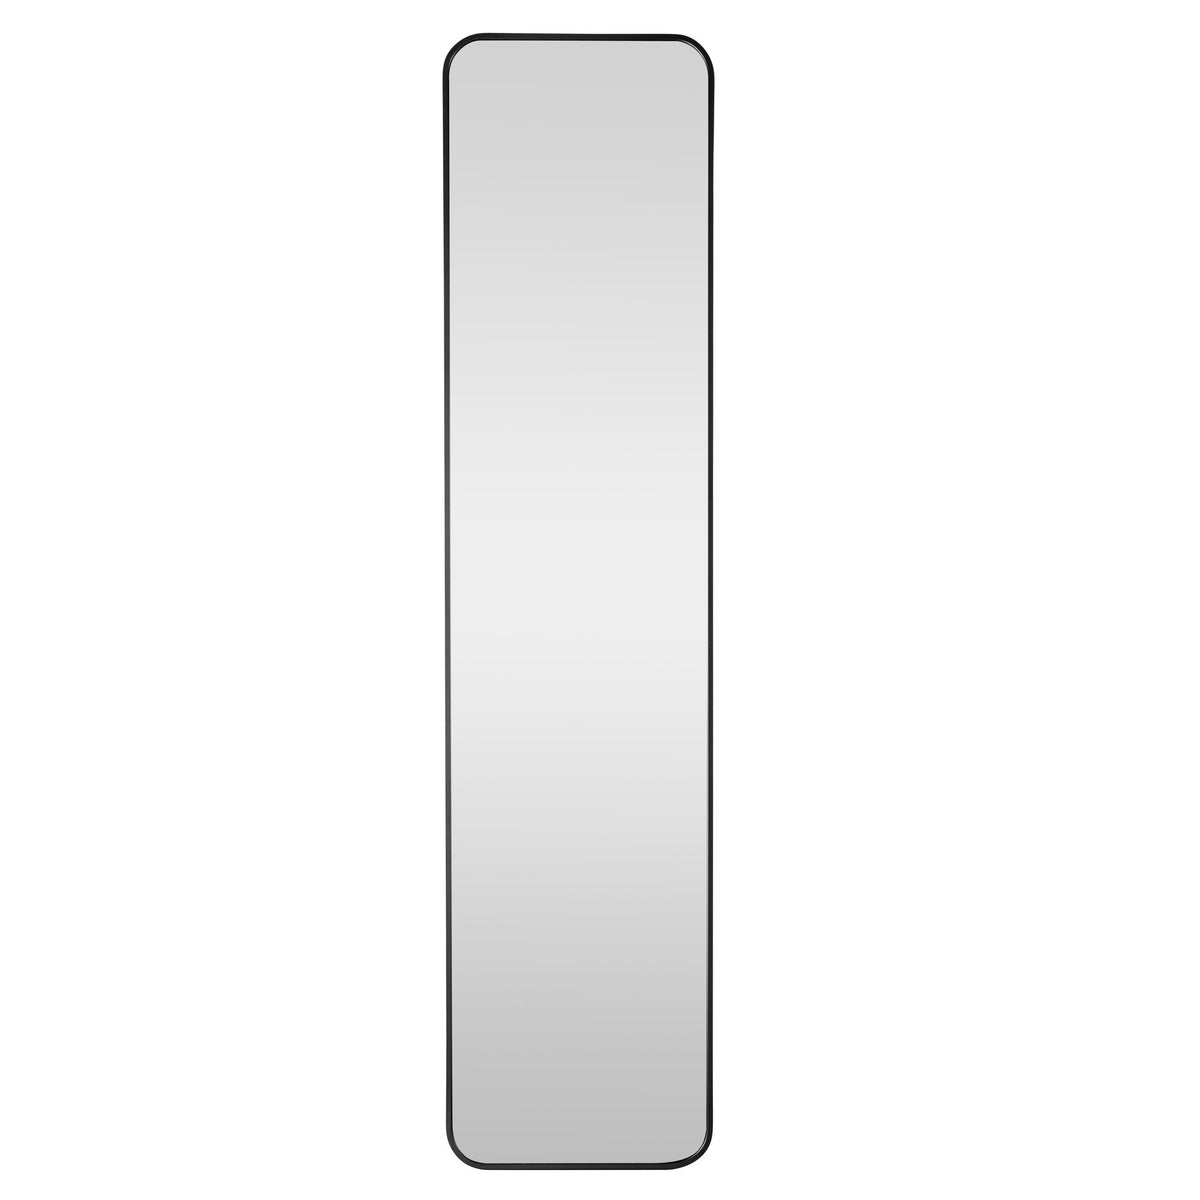 Cortesi Home Skinee Floor Mirror in a Black Aluminum Frame, 14&quot;x60&quot;